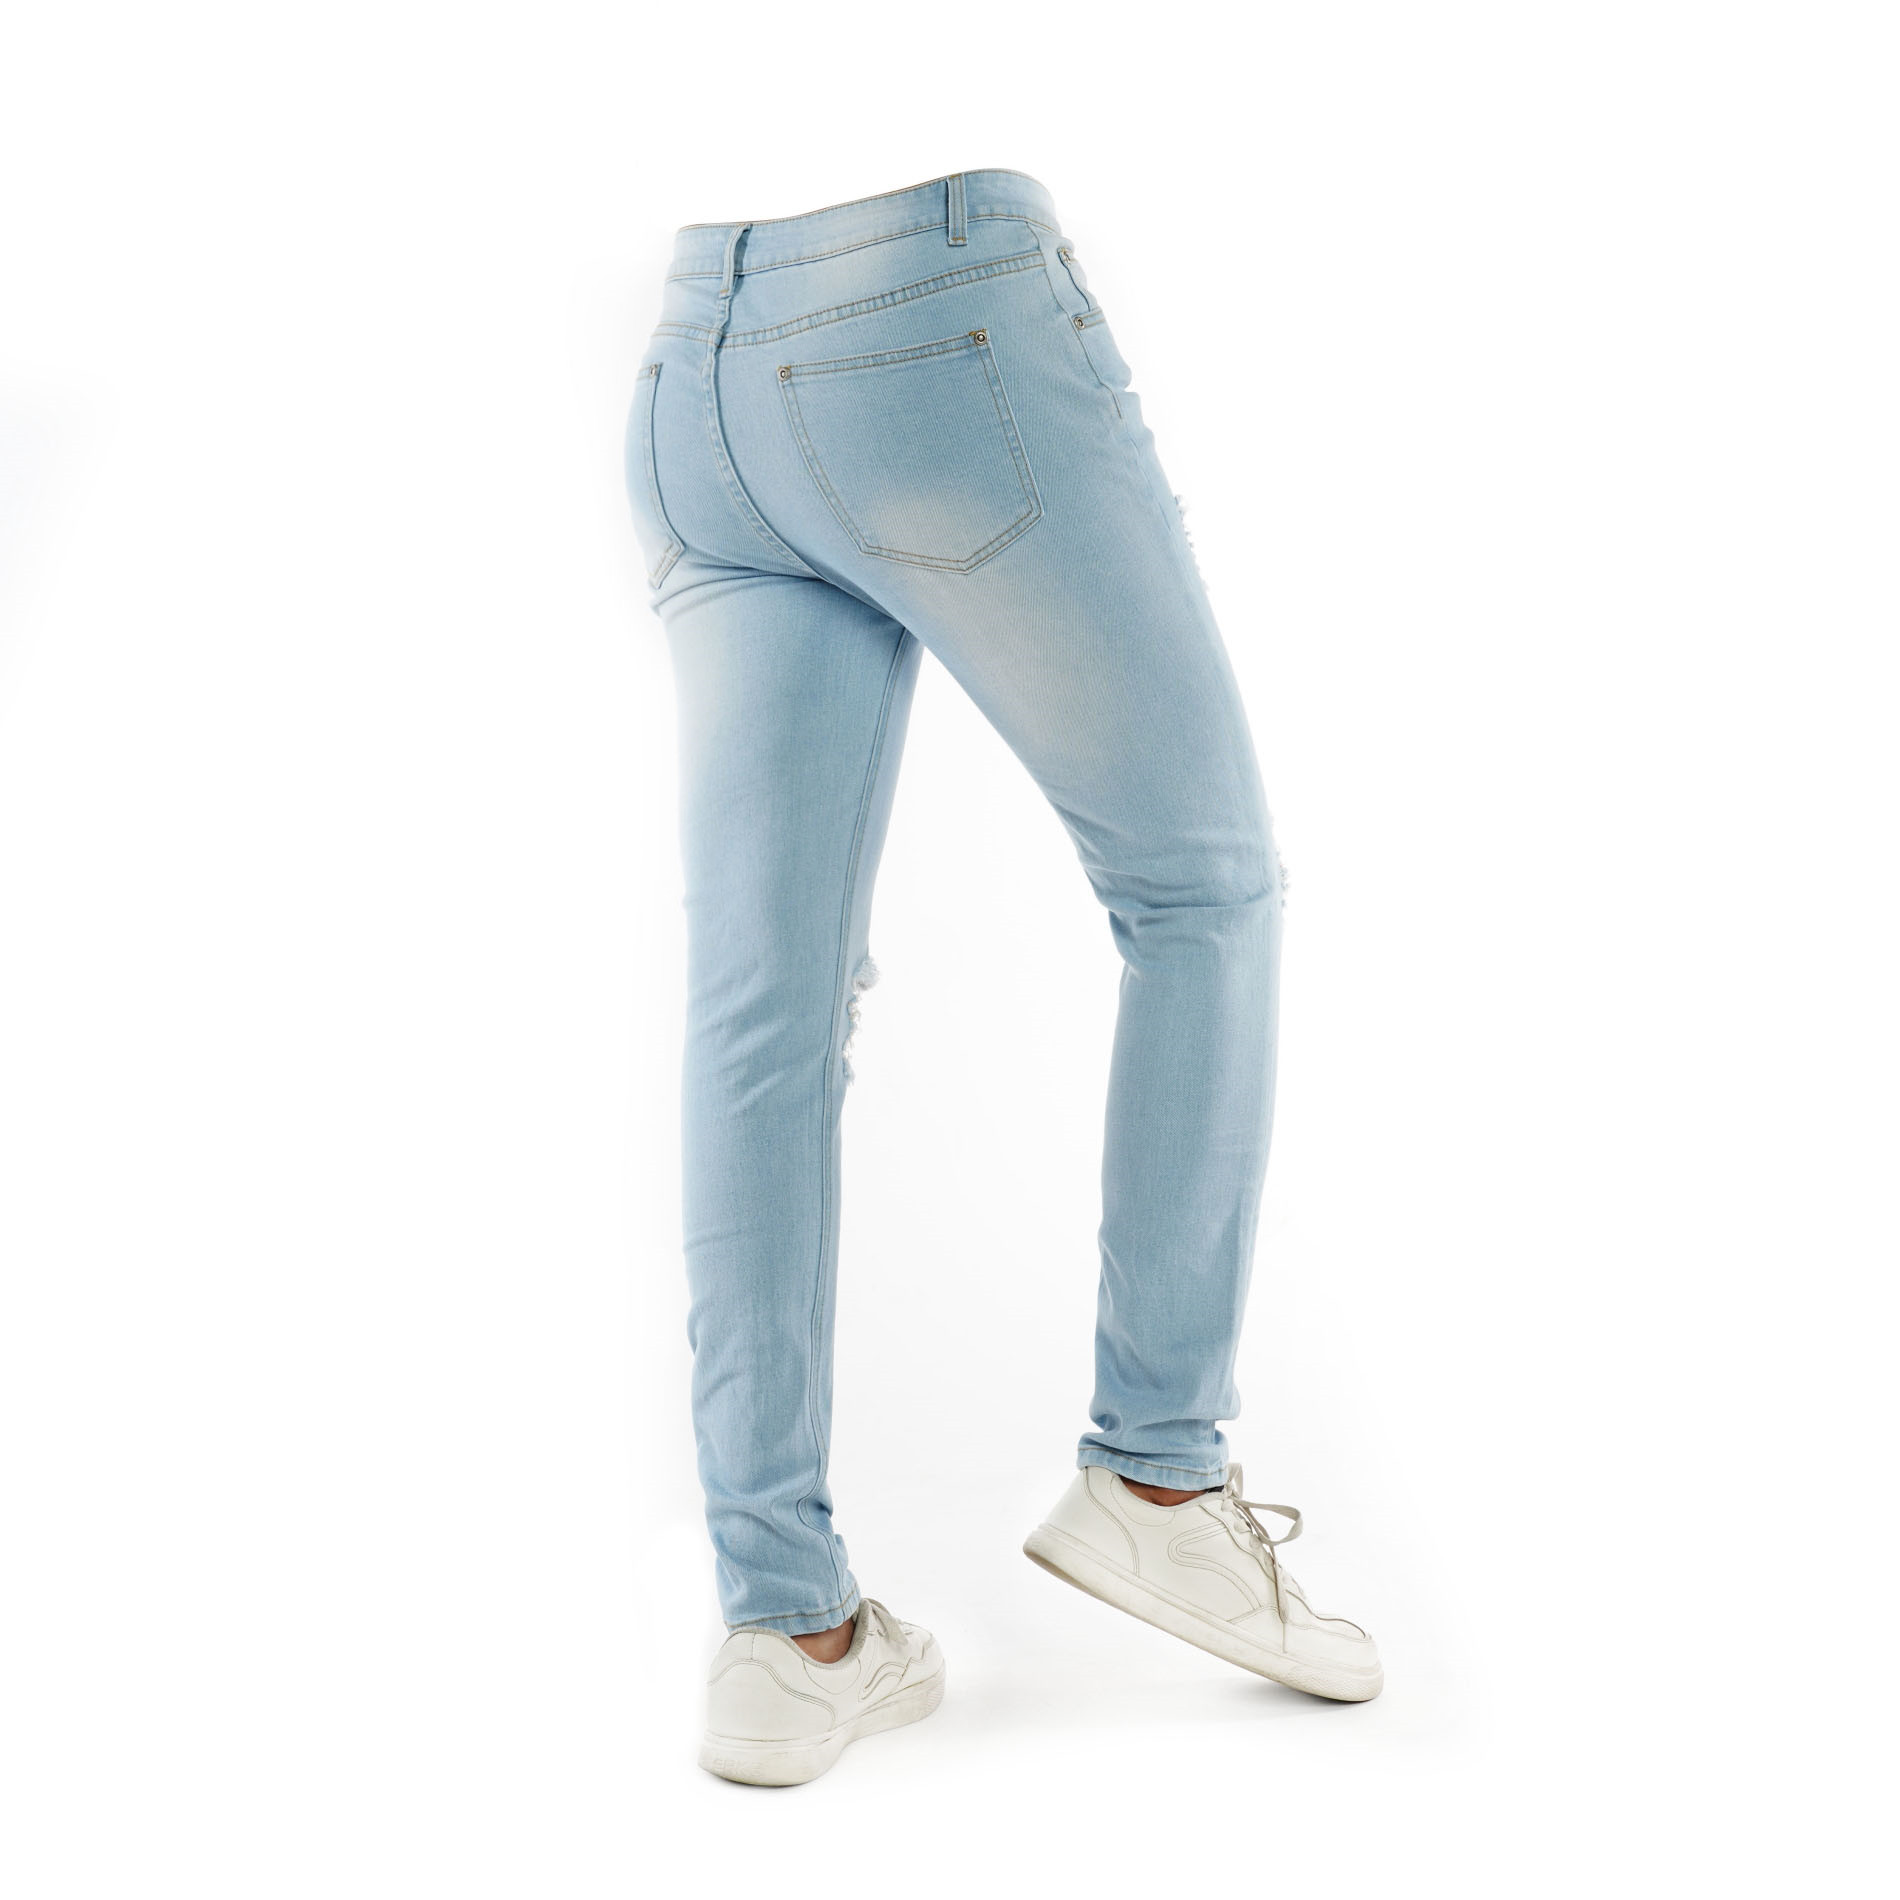 Denim garment factory bleached blue torn jeans men's skinny jeans